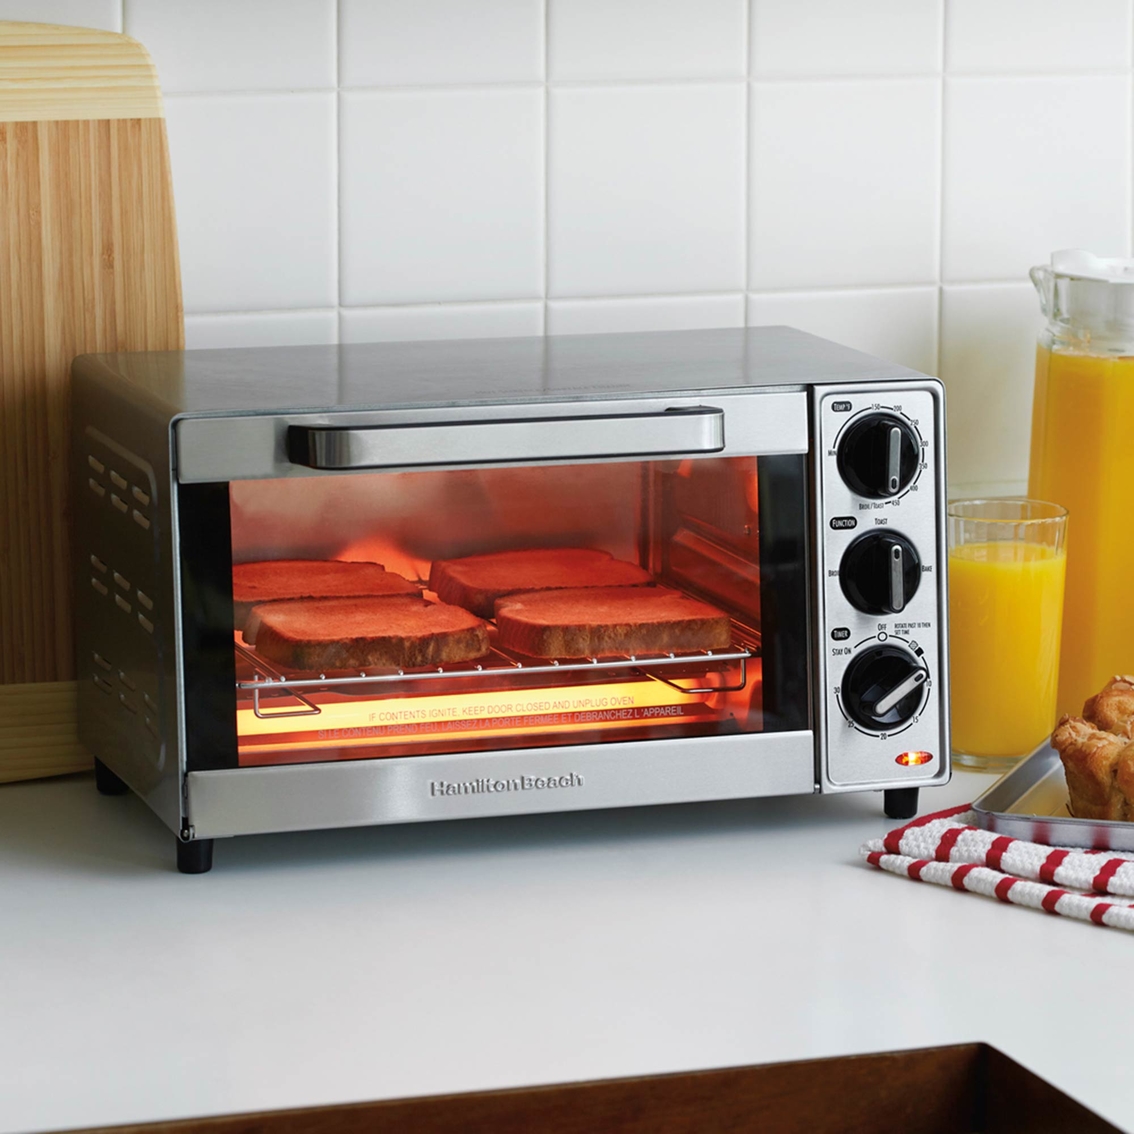 Hamilton Beach Toaster Oven - Image 2 of 4